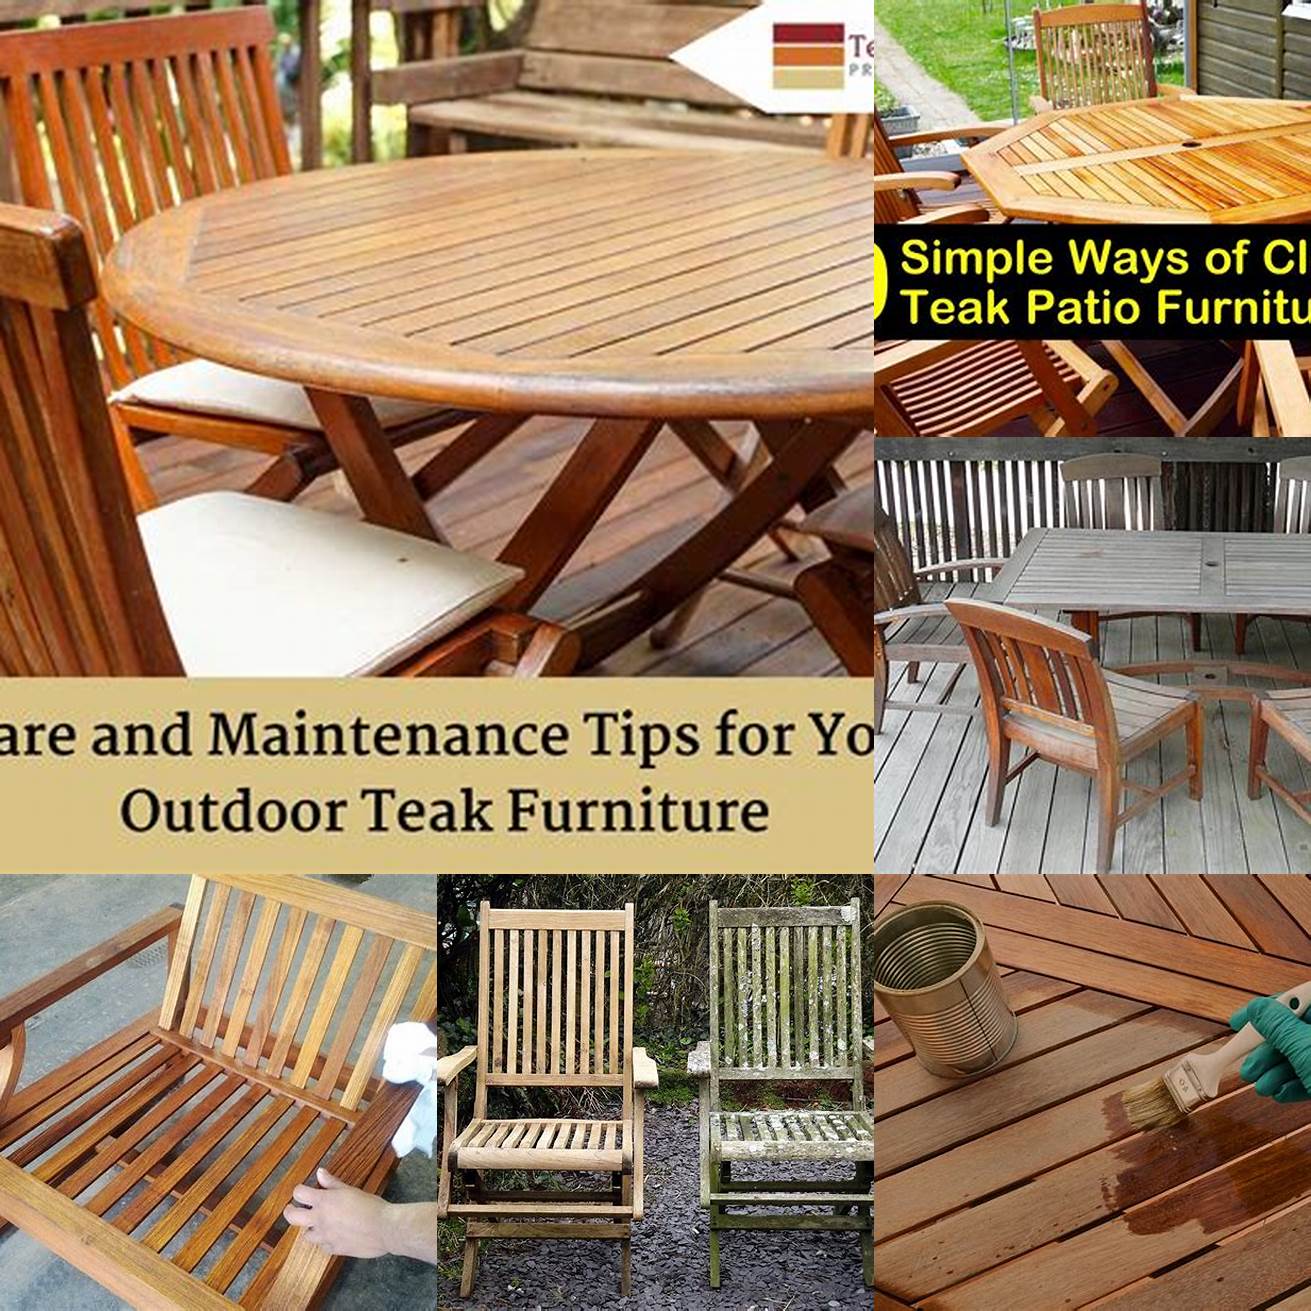 Teak Outdoor Furniture Maintenance Tips